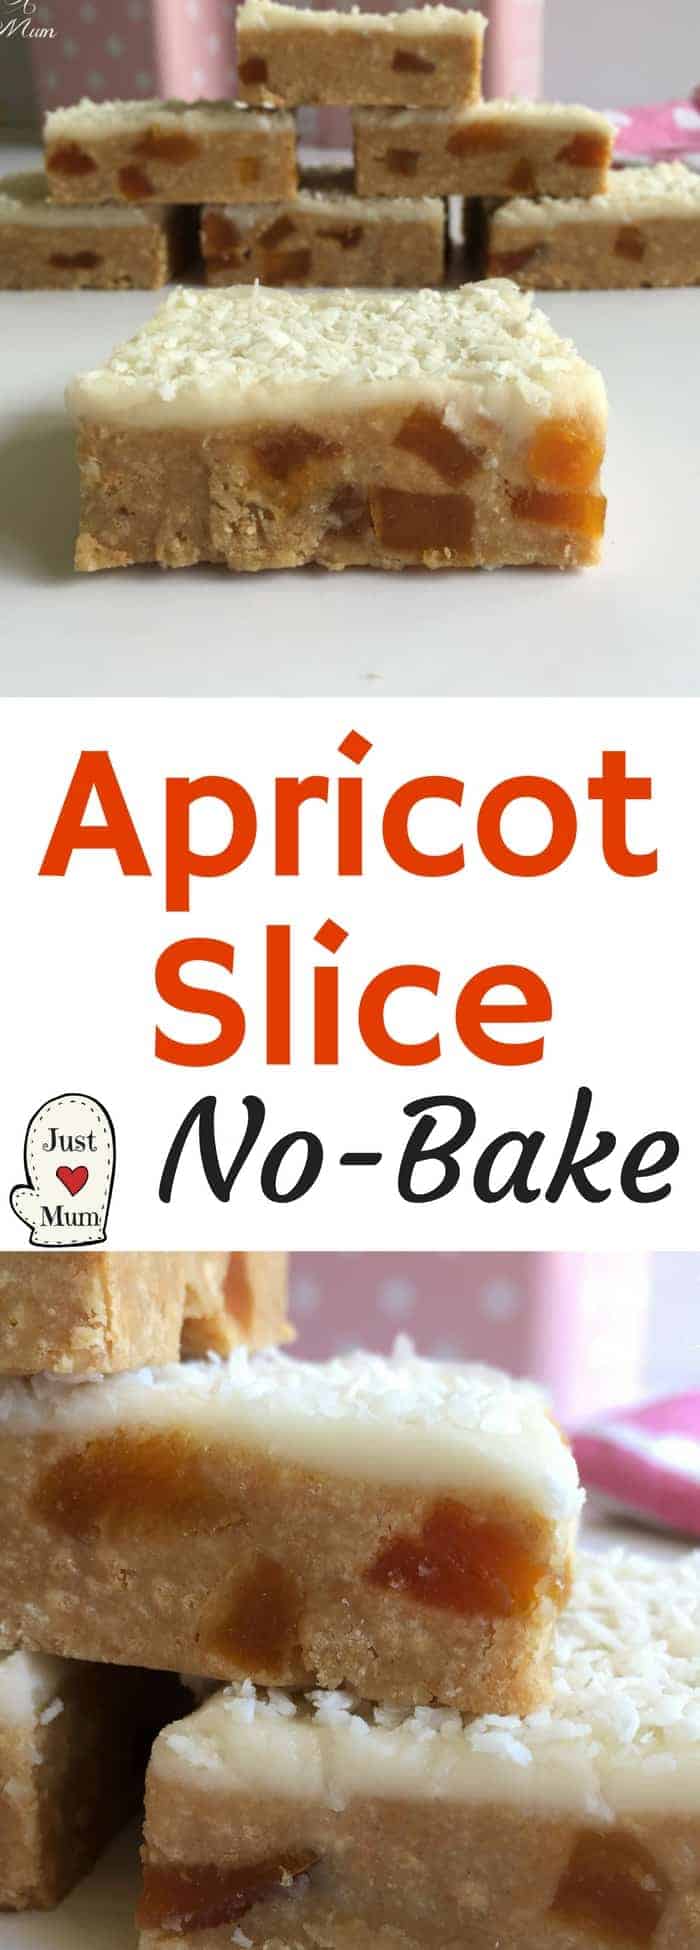 Just A Mum's Apricot Slice - No Bake